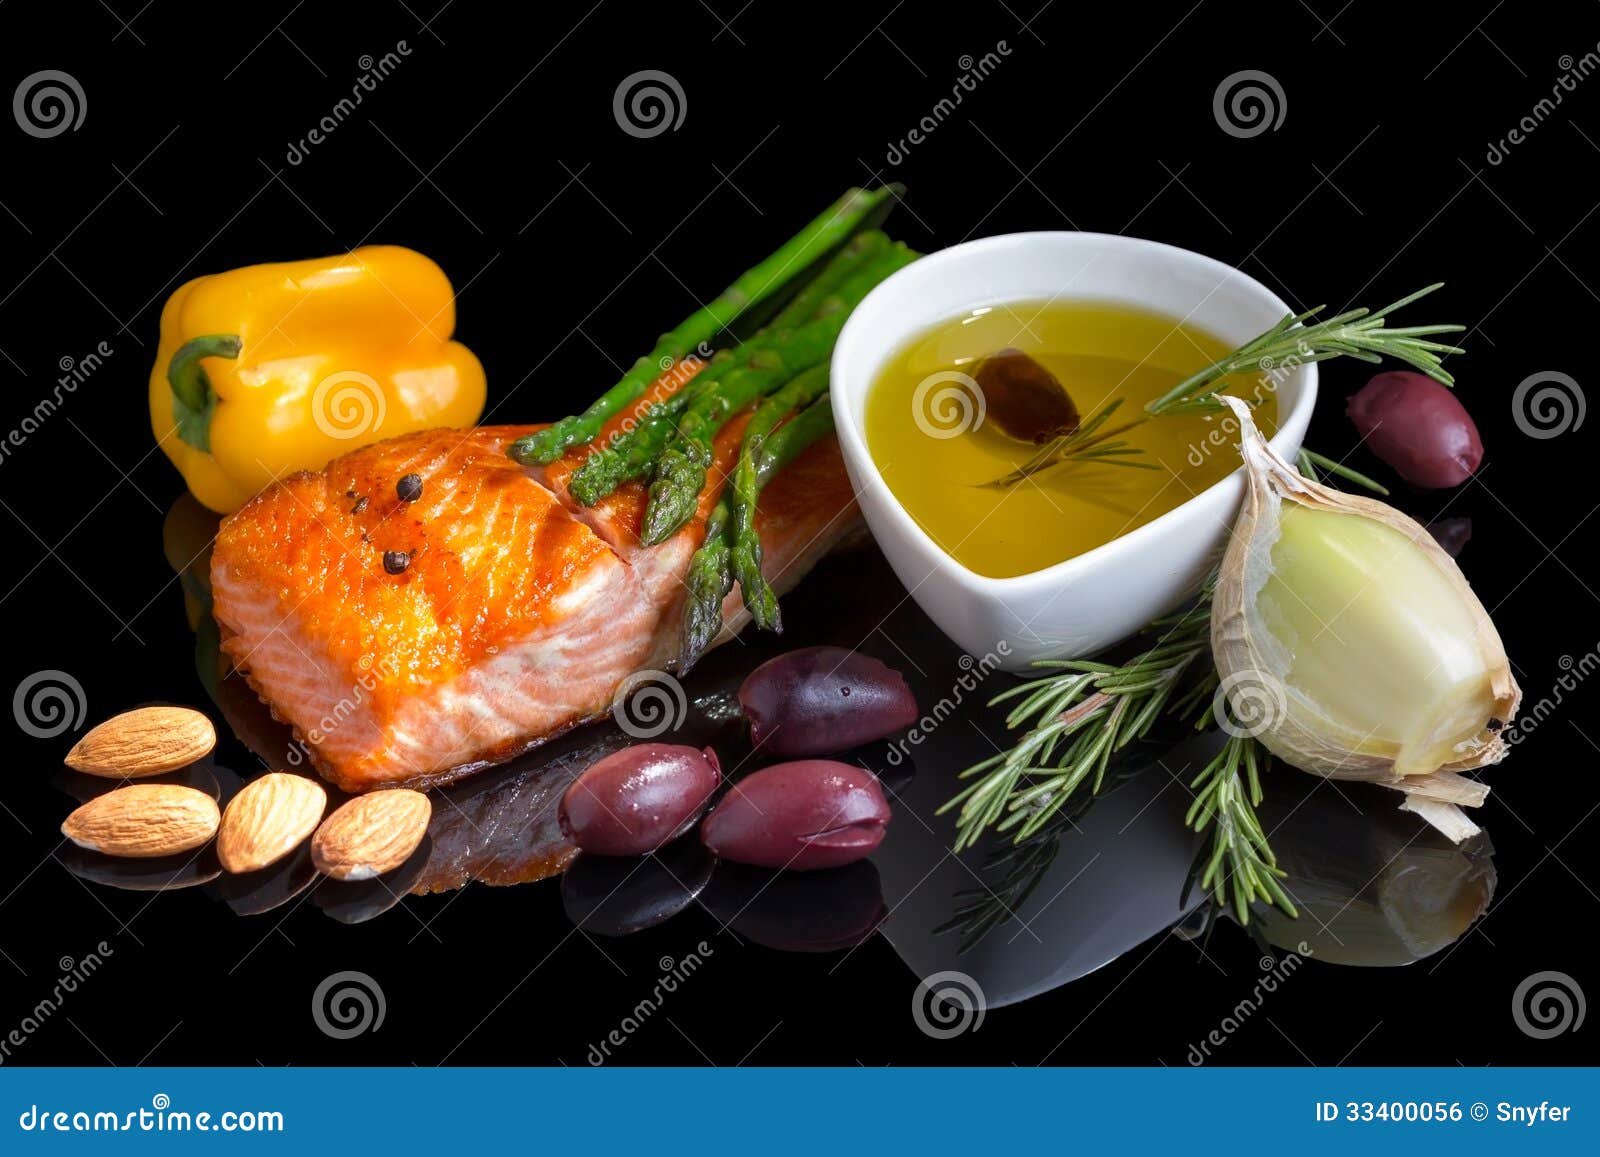 Dieta mediterránea omega-3. Filete de pescados, aceitunas, nueces e hierbas en fondo negro con la reflexión.